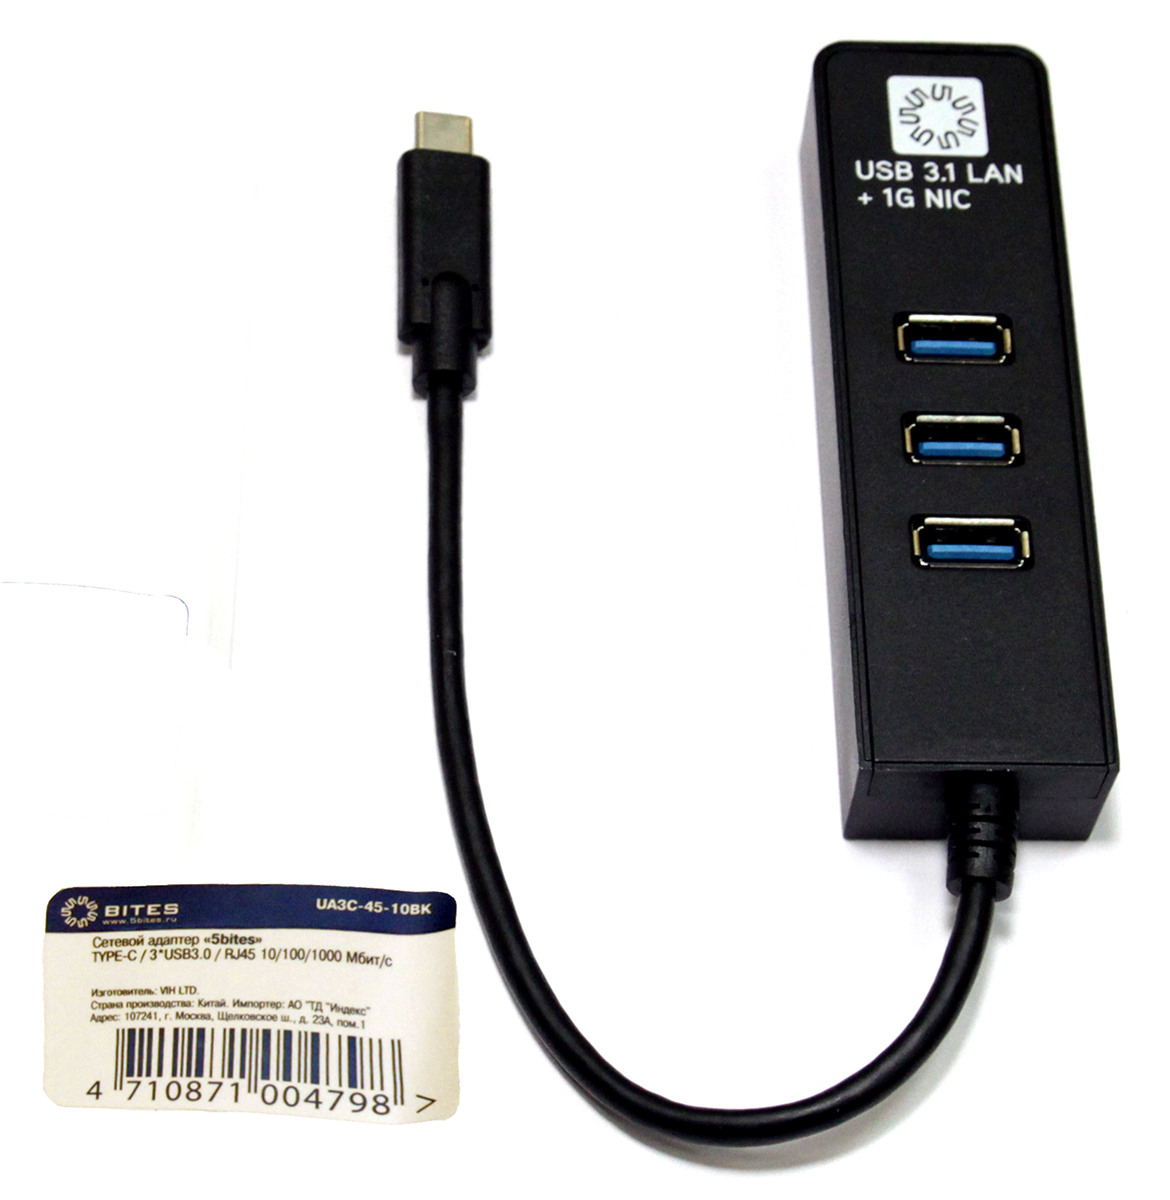 Гигабитная сетевая карта с USB хабом UA3C-45-10BK